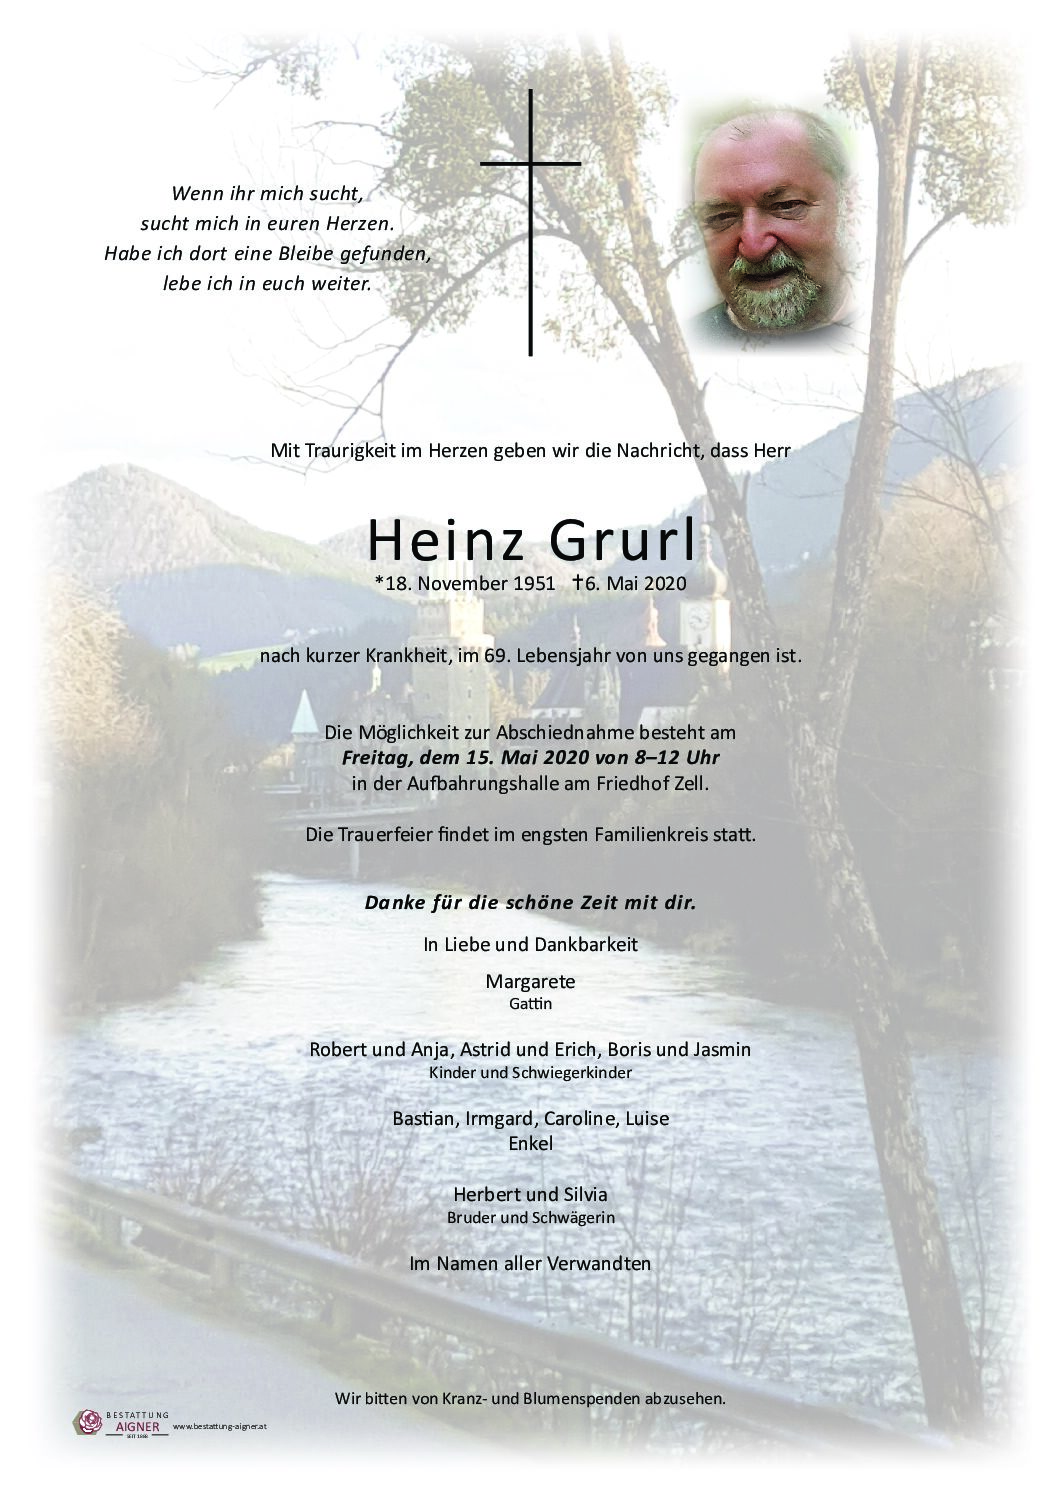 Heinz Grurl